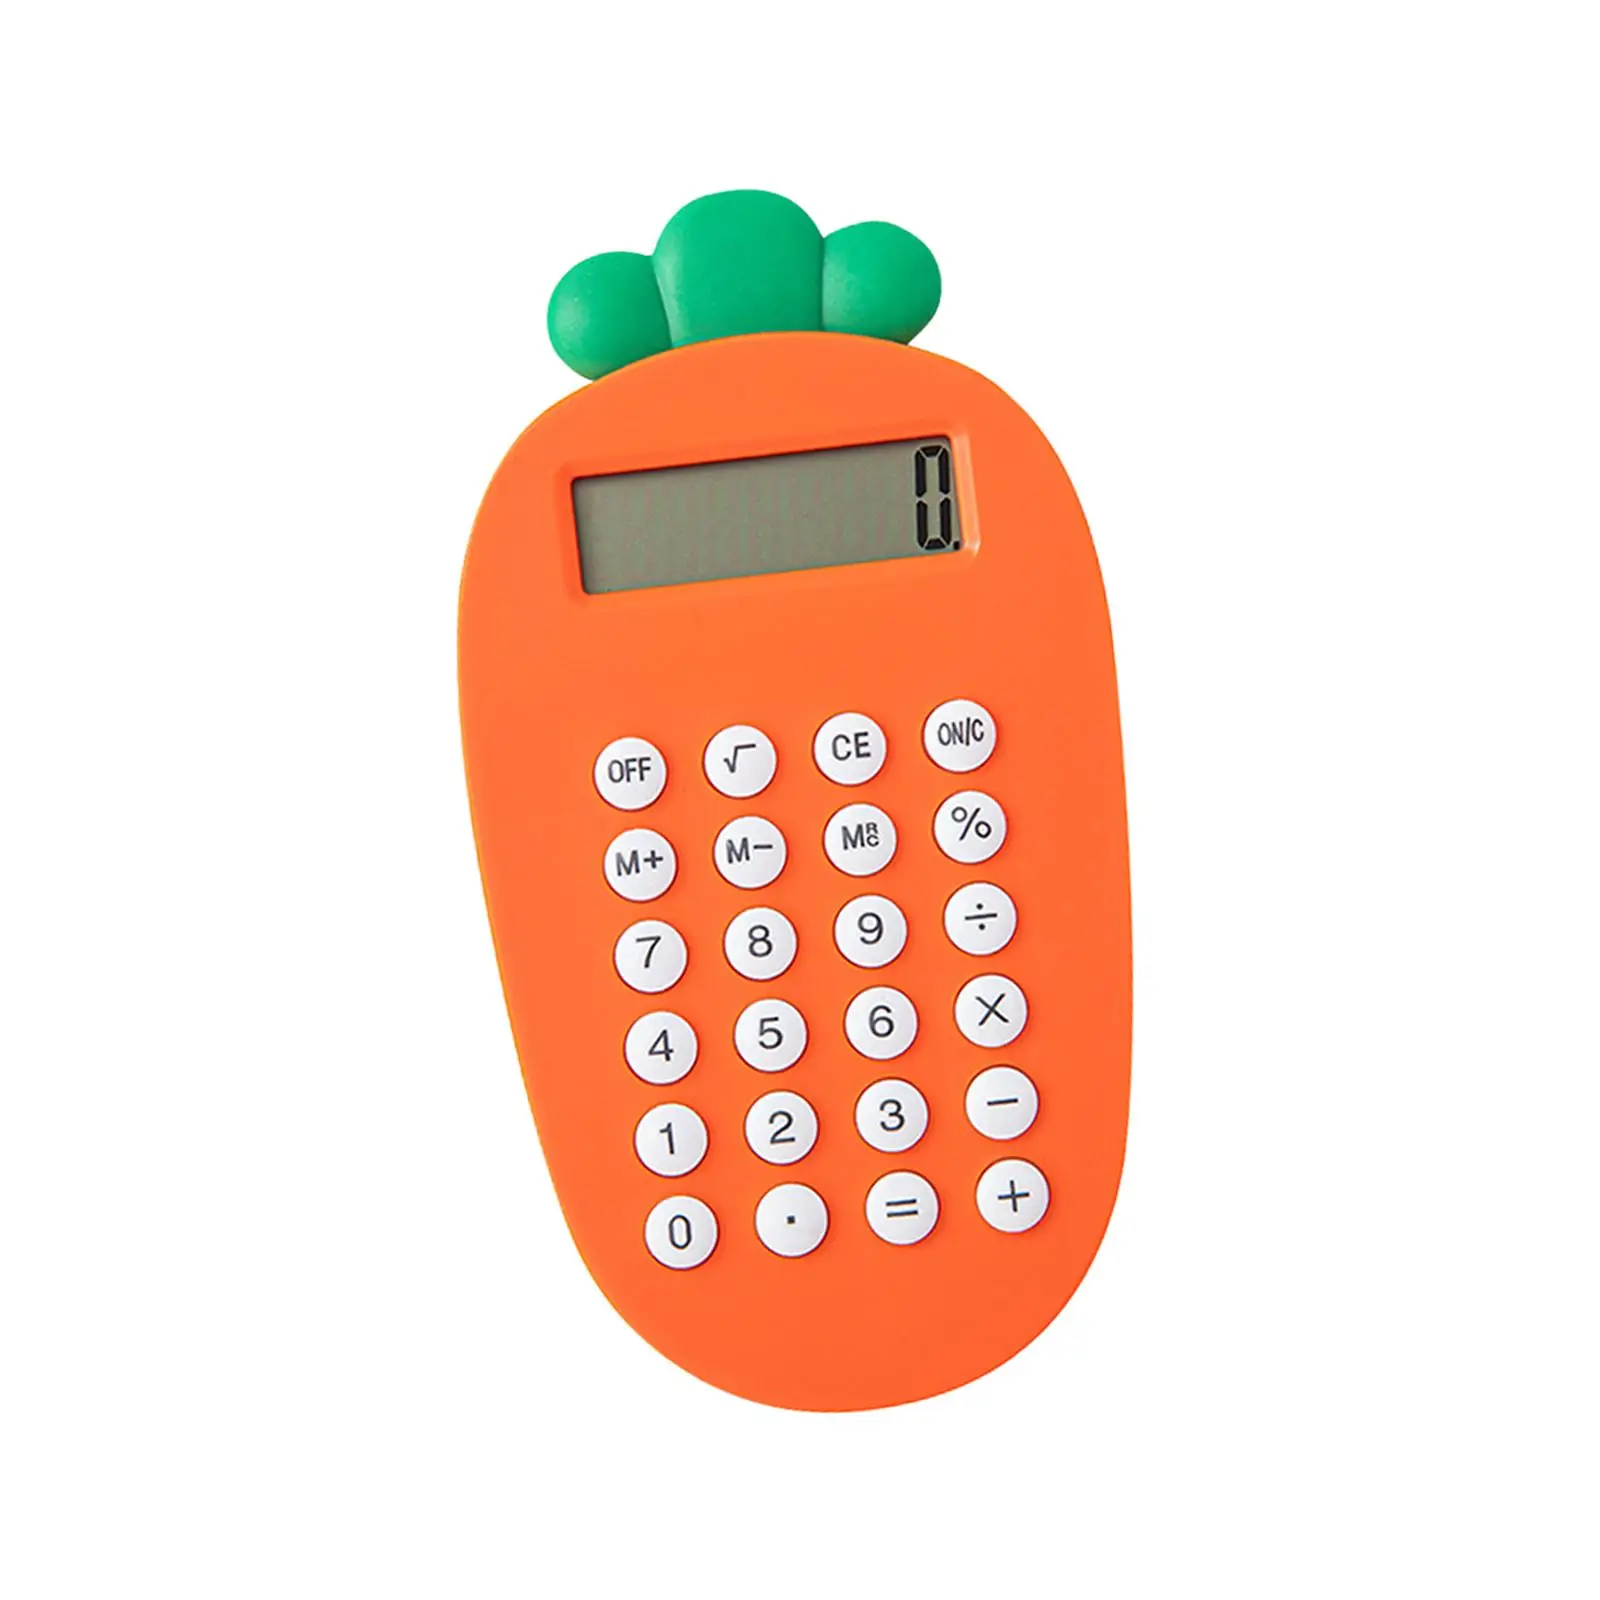 Small Calculator Cute Calculator Smart Calculator 8 Digit Digital Desktop Calculator Basic Standard Calculators for Home Office